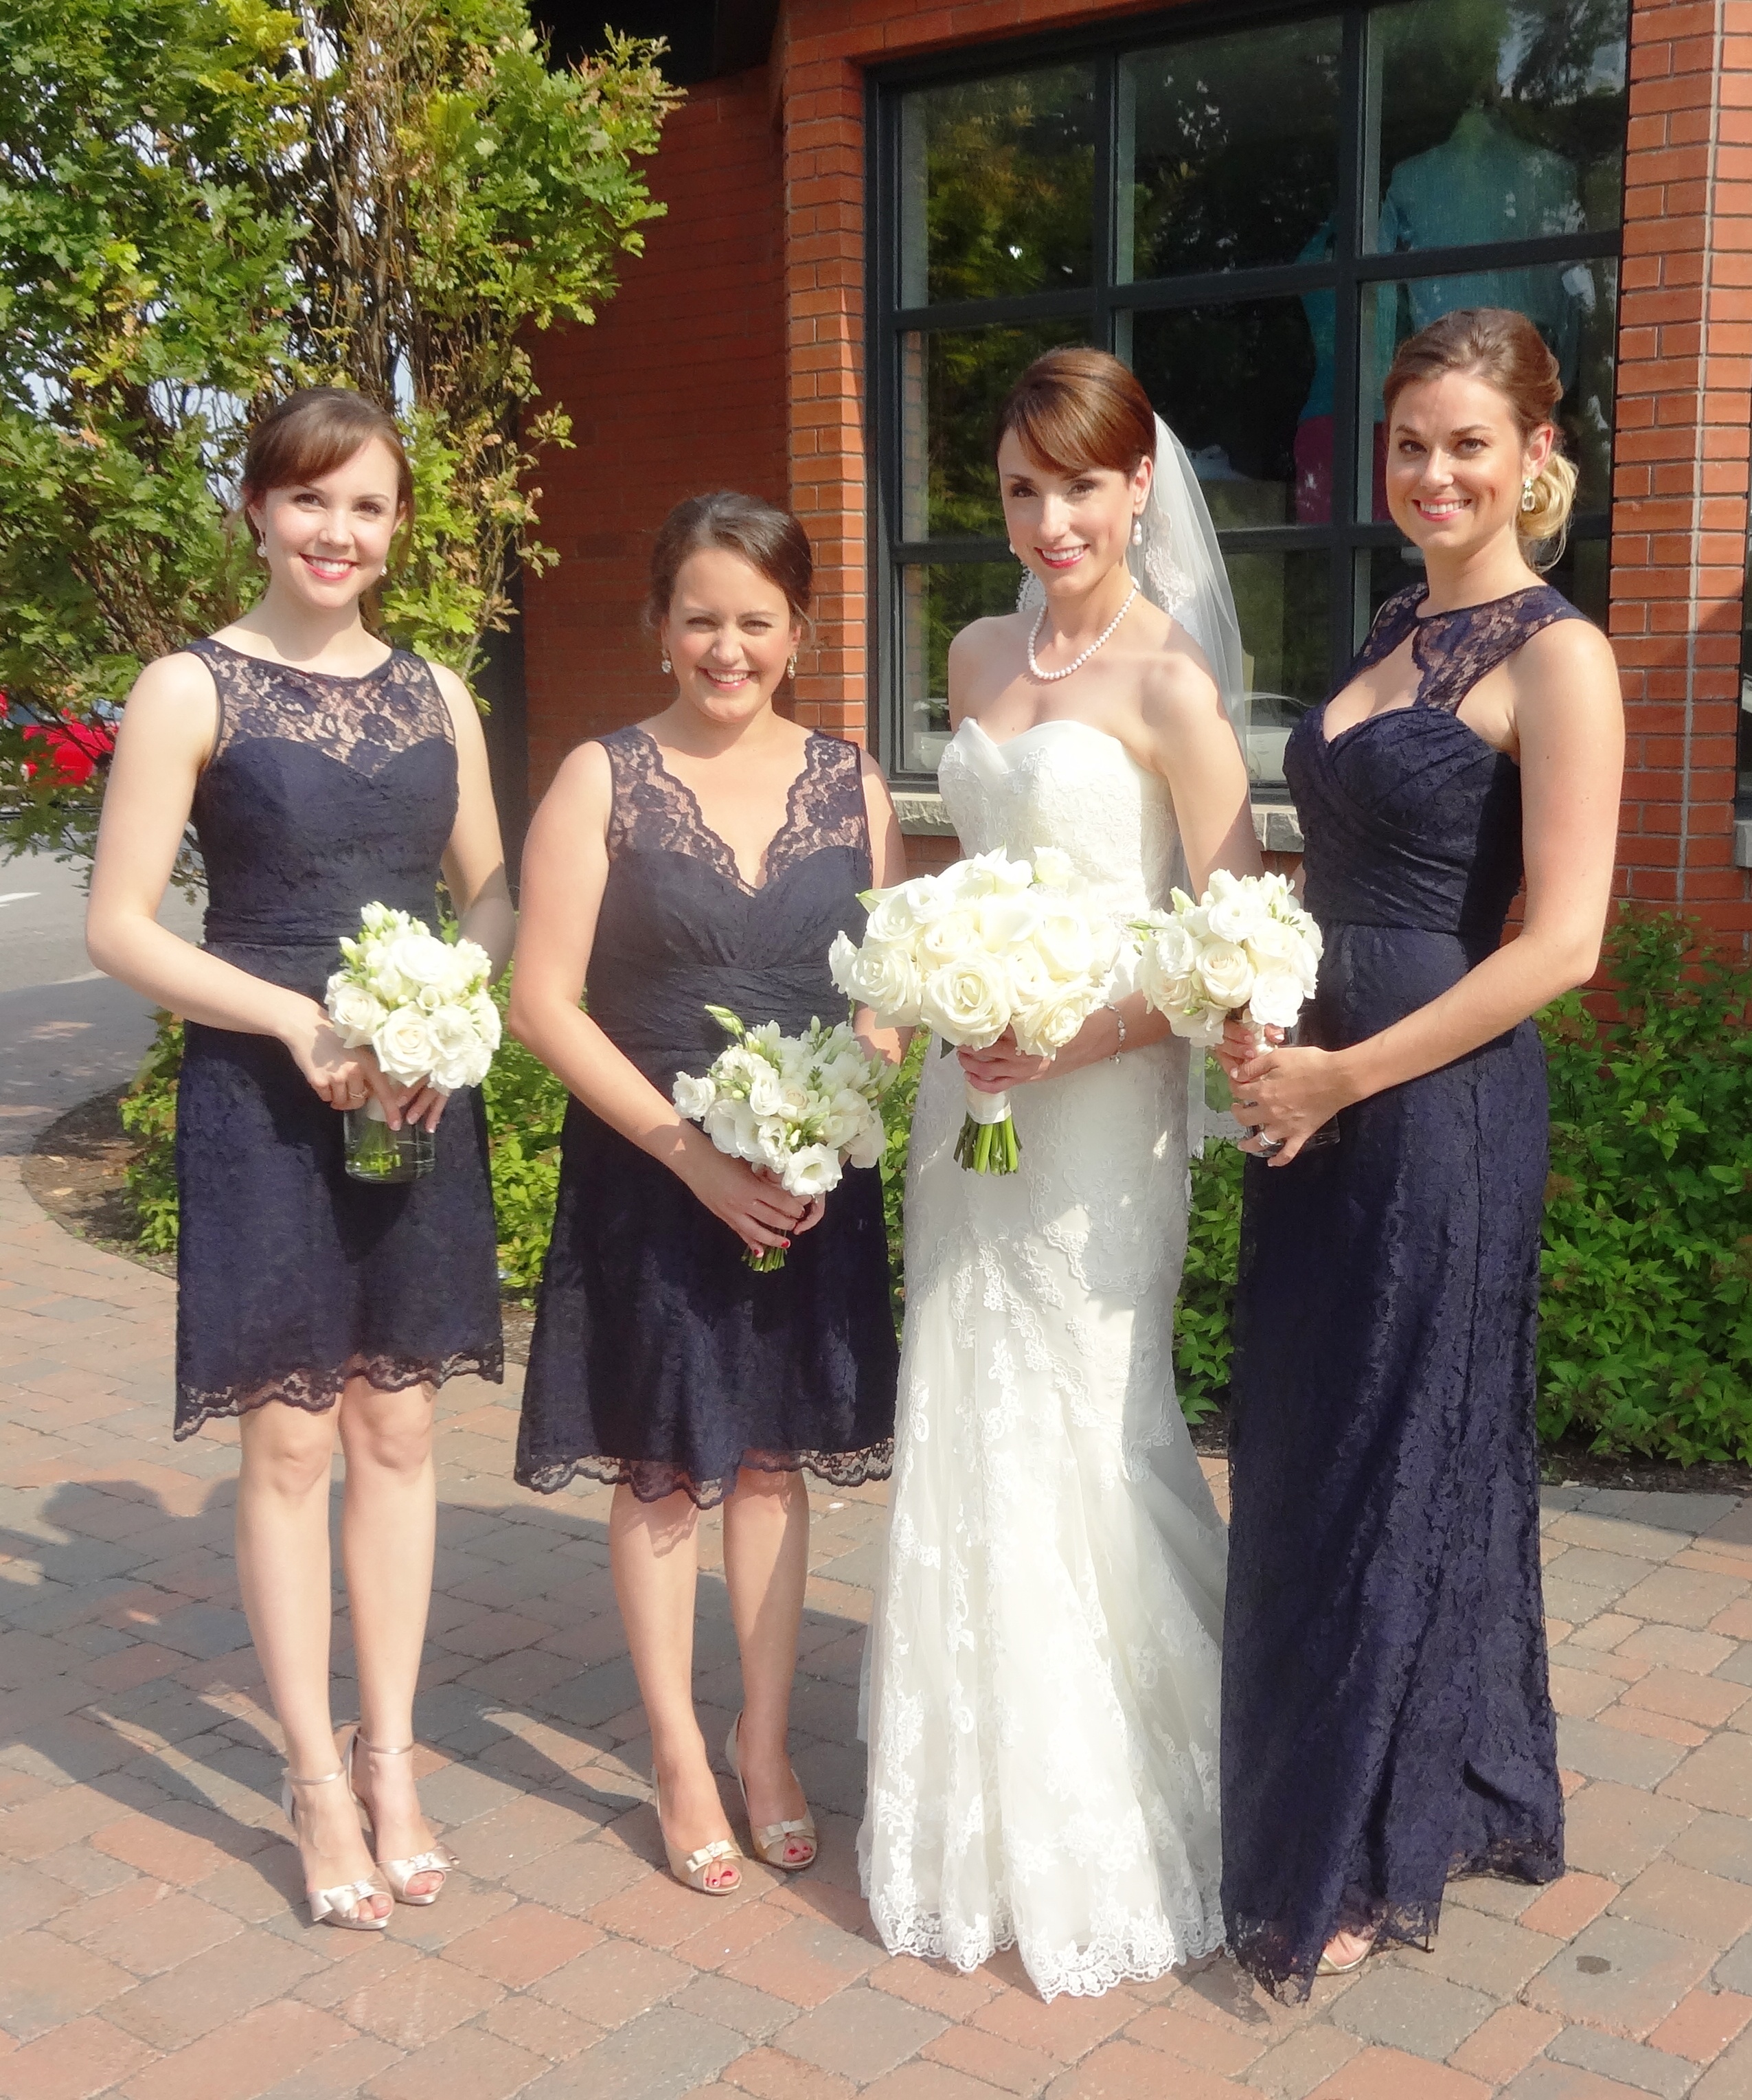 https://www.ottawaweddingmagazine.com/wp-content/uploads/2014/09/bridesmaids.jpg